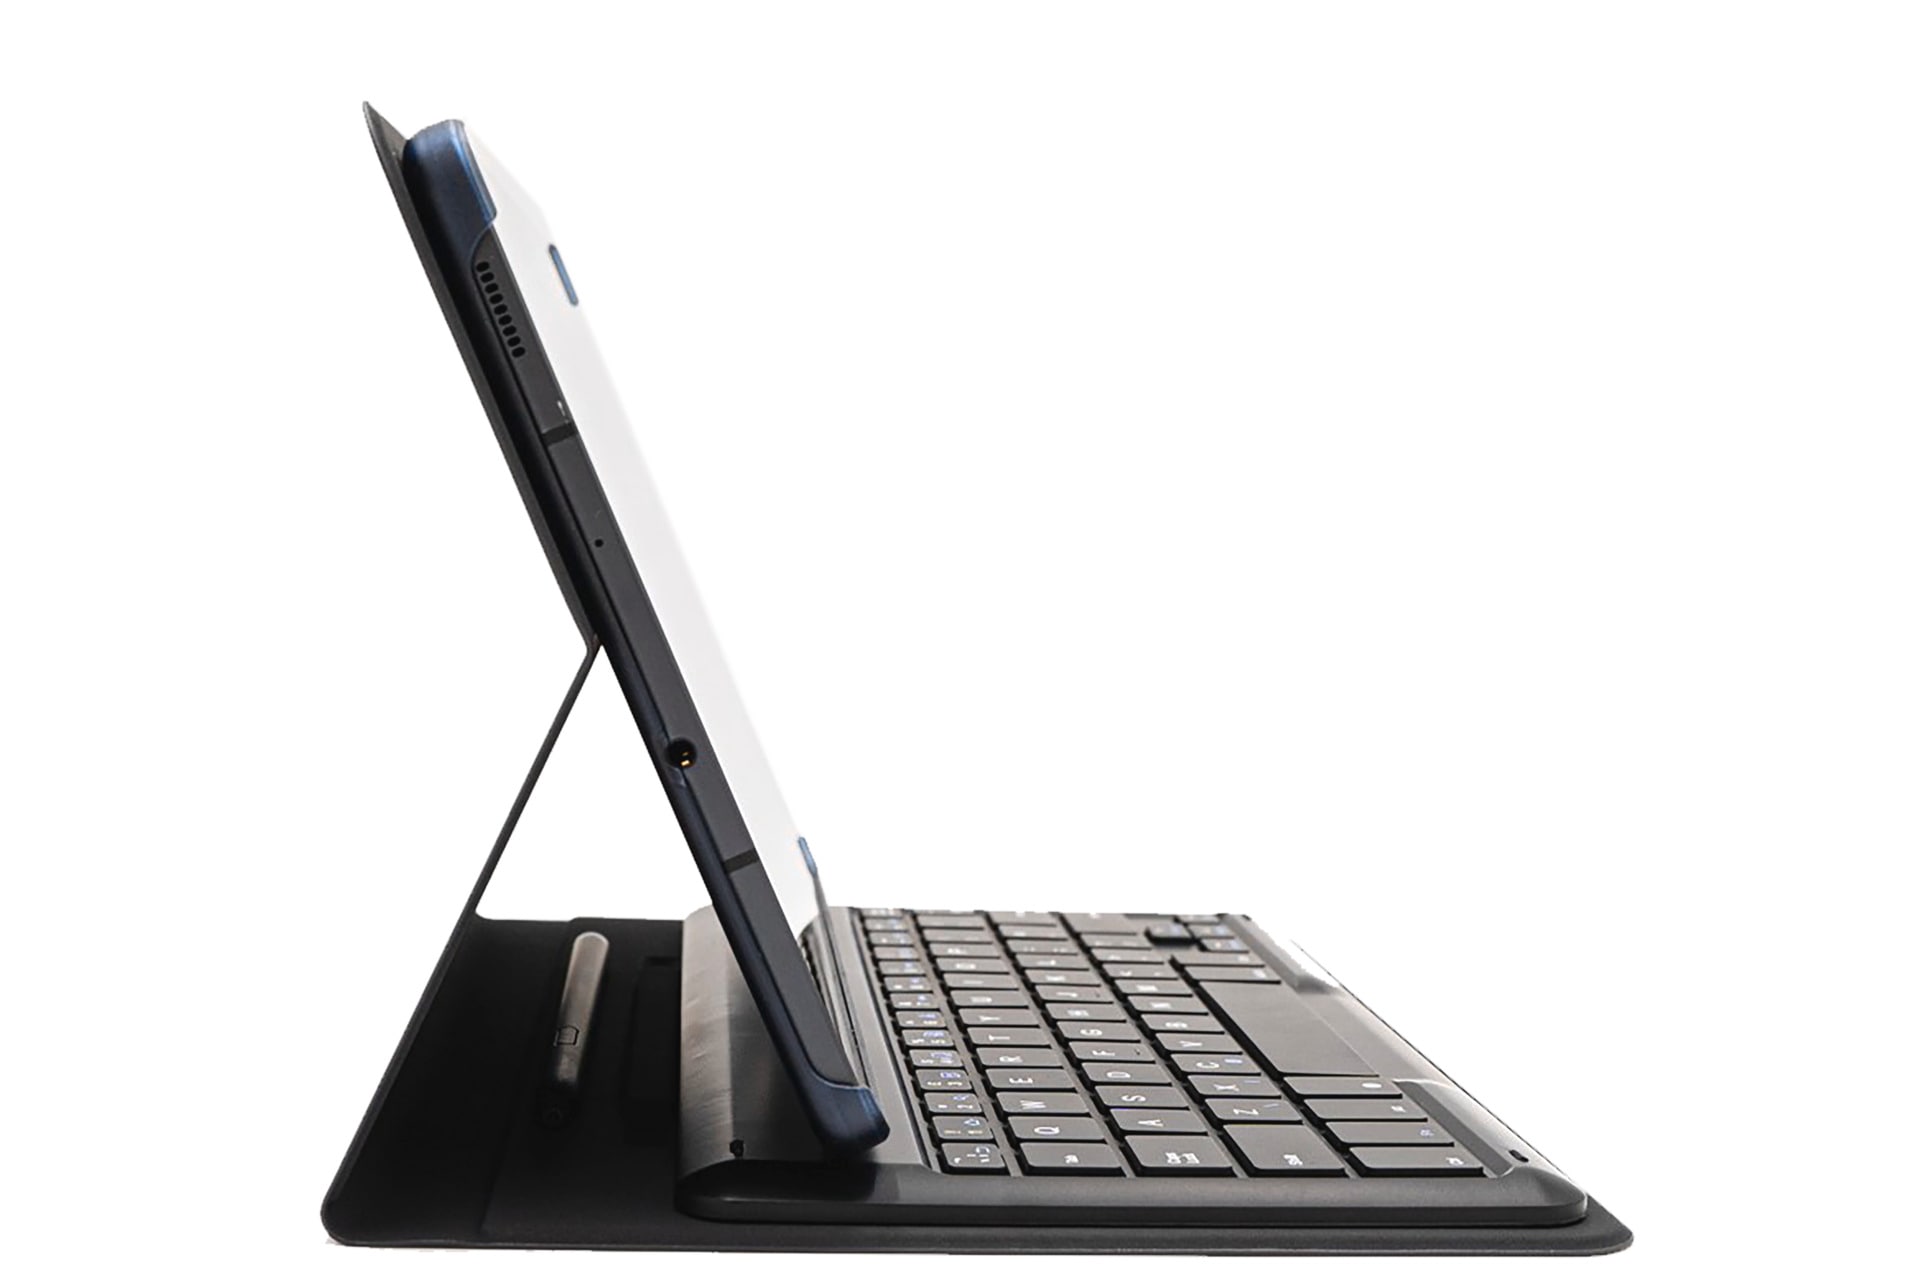 Samsung Tablet-Tastatur »TARGUS Book Cover Keyboard GP-FBP615TGA«, für Samsung Galaxy Tab S6 Lite